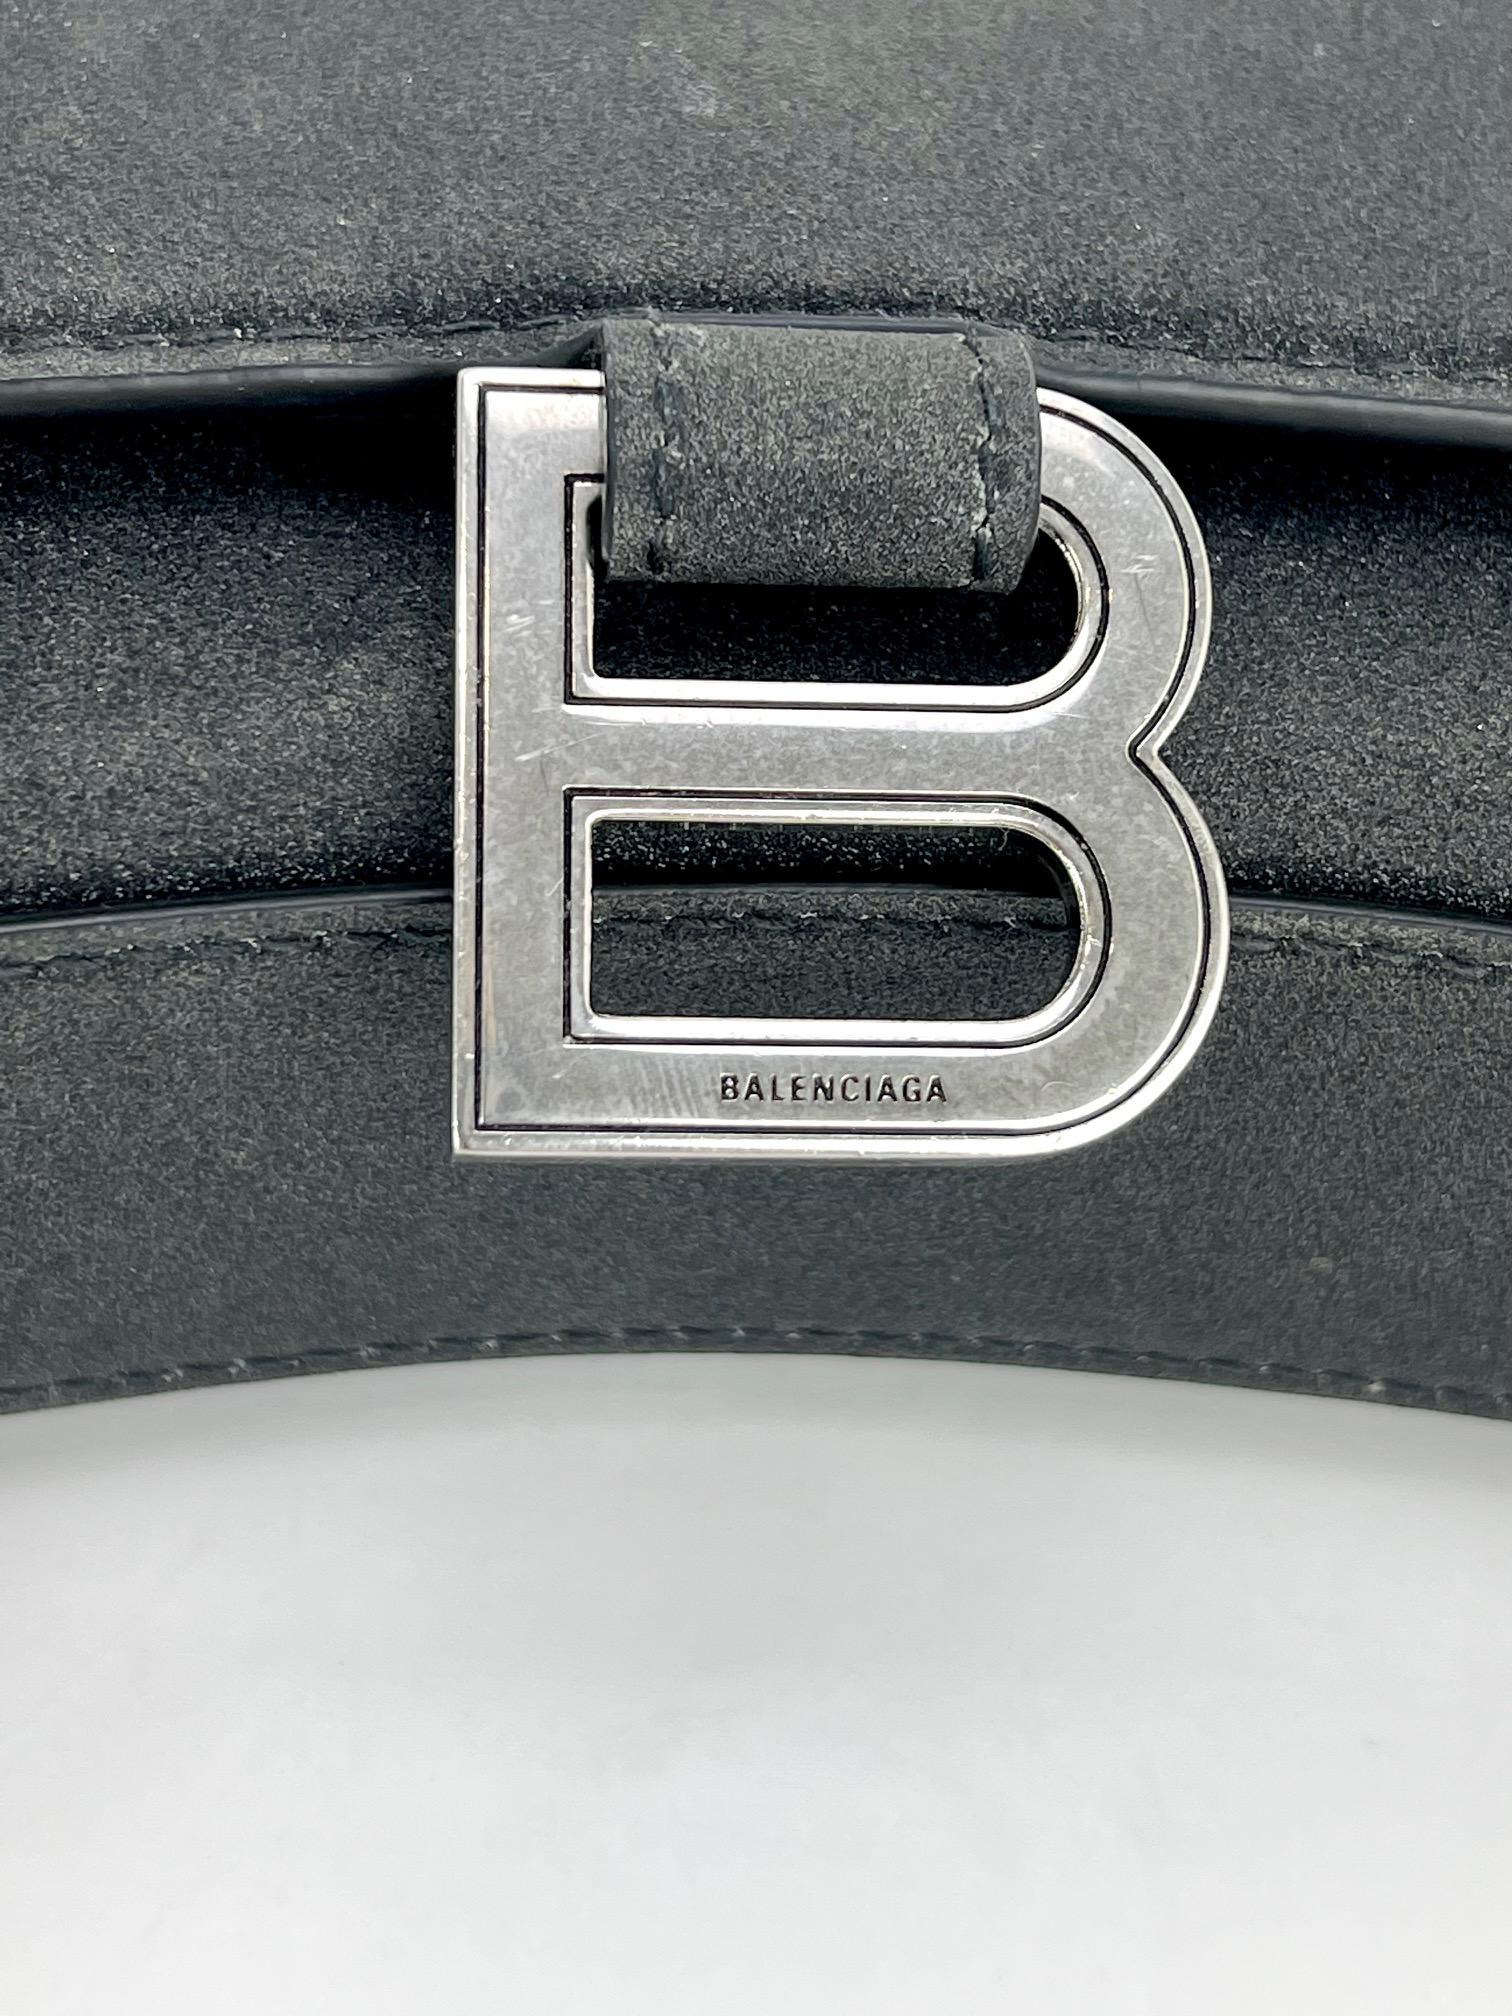 BALENCIAGA Hourglass Wallet On Chain Black Glitter Clutch Shoulder Bag For Sale 8